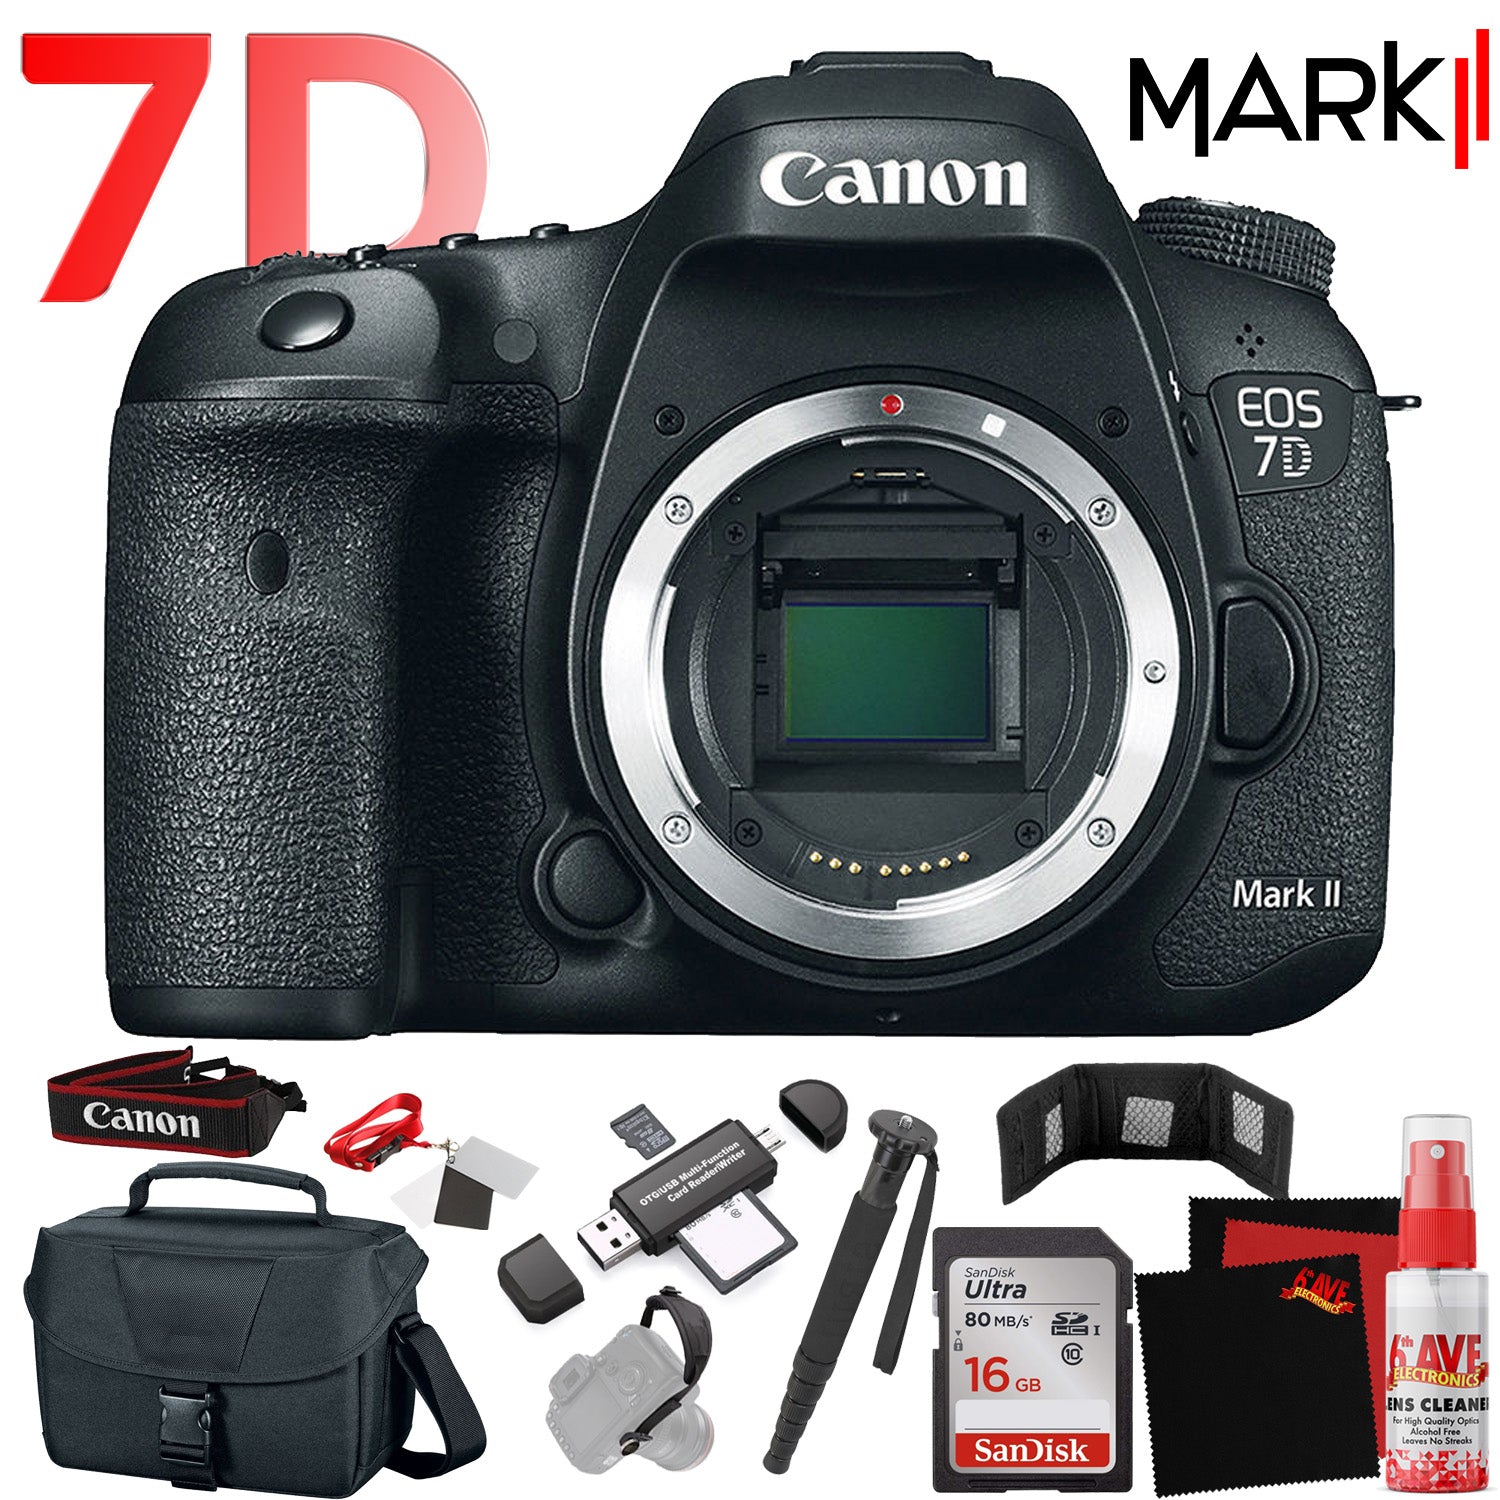 Canon EOS 7D Mark II DSLR Camera Body w (International Model) with Extra Accessory Bundle